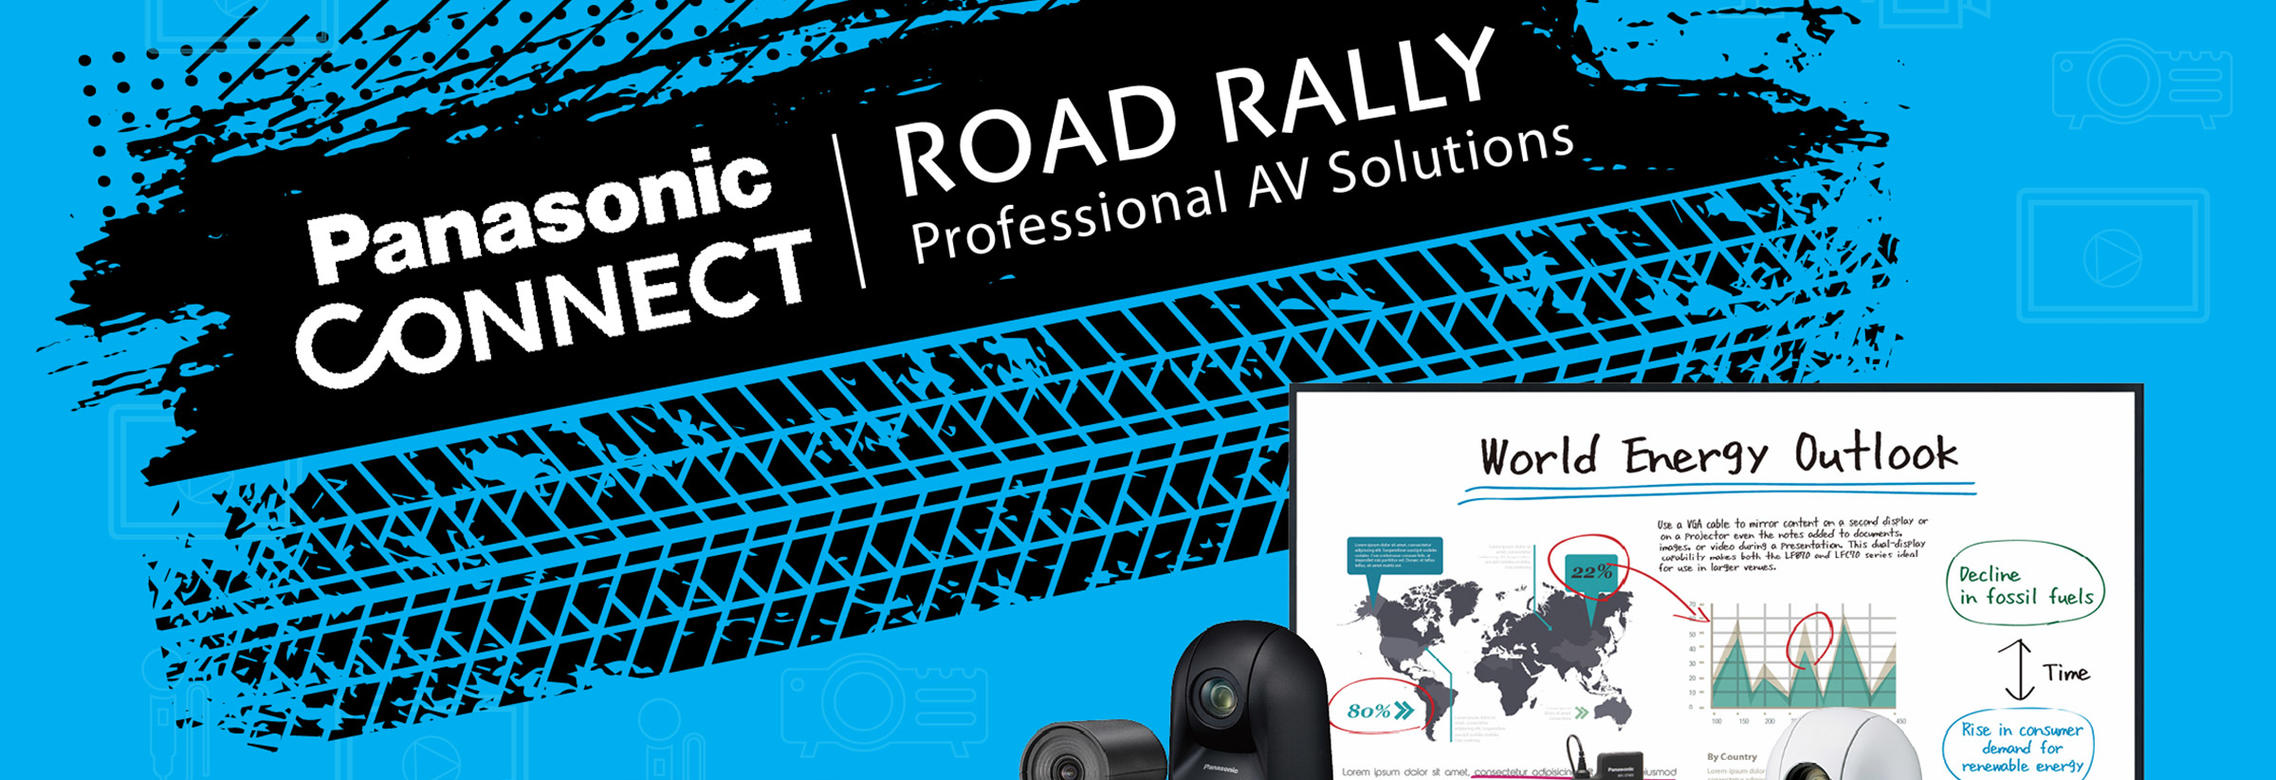 PIVS-Doral-Road-Rally-Web-Hero-Image